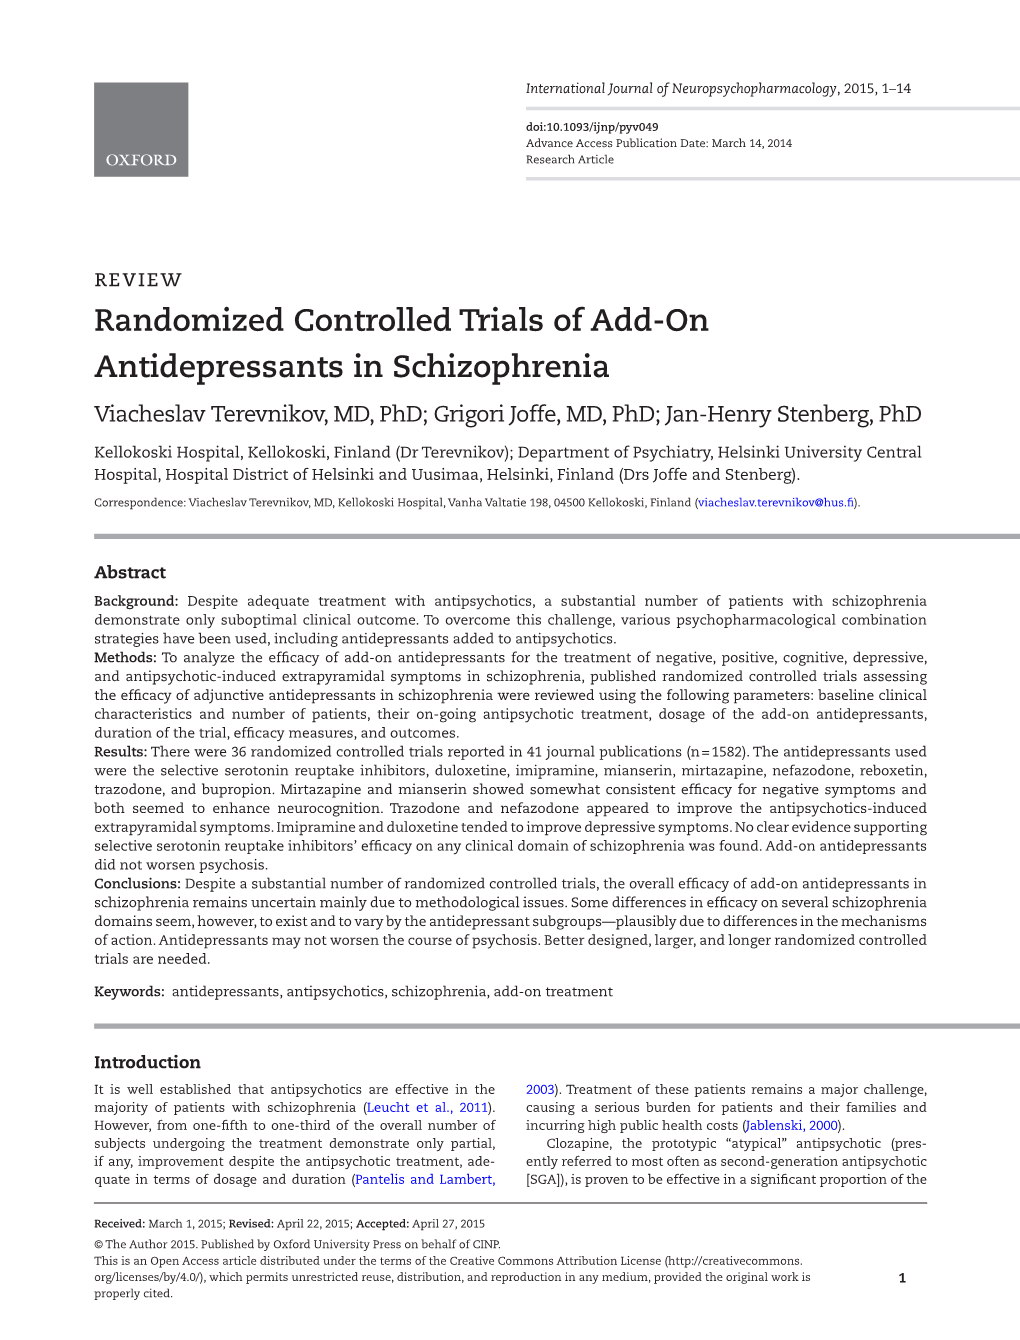 Randomized Controlled Trials of Add-On Antidepressants in Schizophrenia Viacheslav Terevnikov, MD, Phd; Grigori Joffe, MD, Phd; Jan-Henry Stenberg, Phd